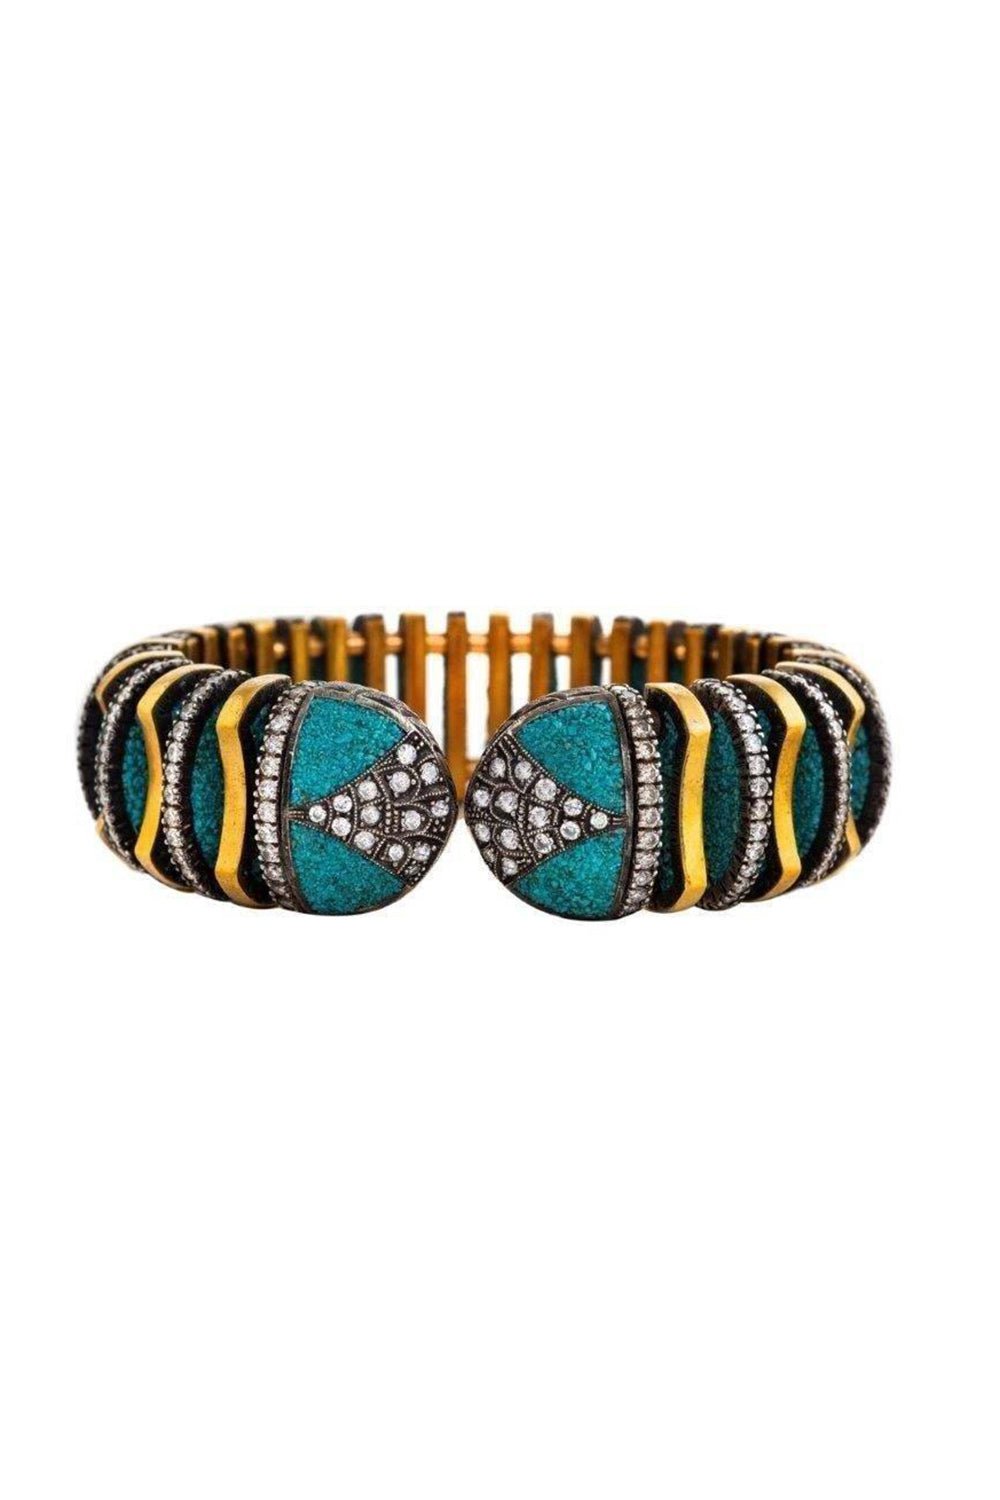 SEVAN BICAKCI-Turquoise Micro Mosaic Cuff Bracelet-YELLOW GOLD